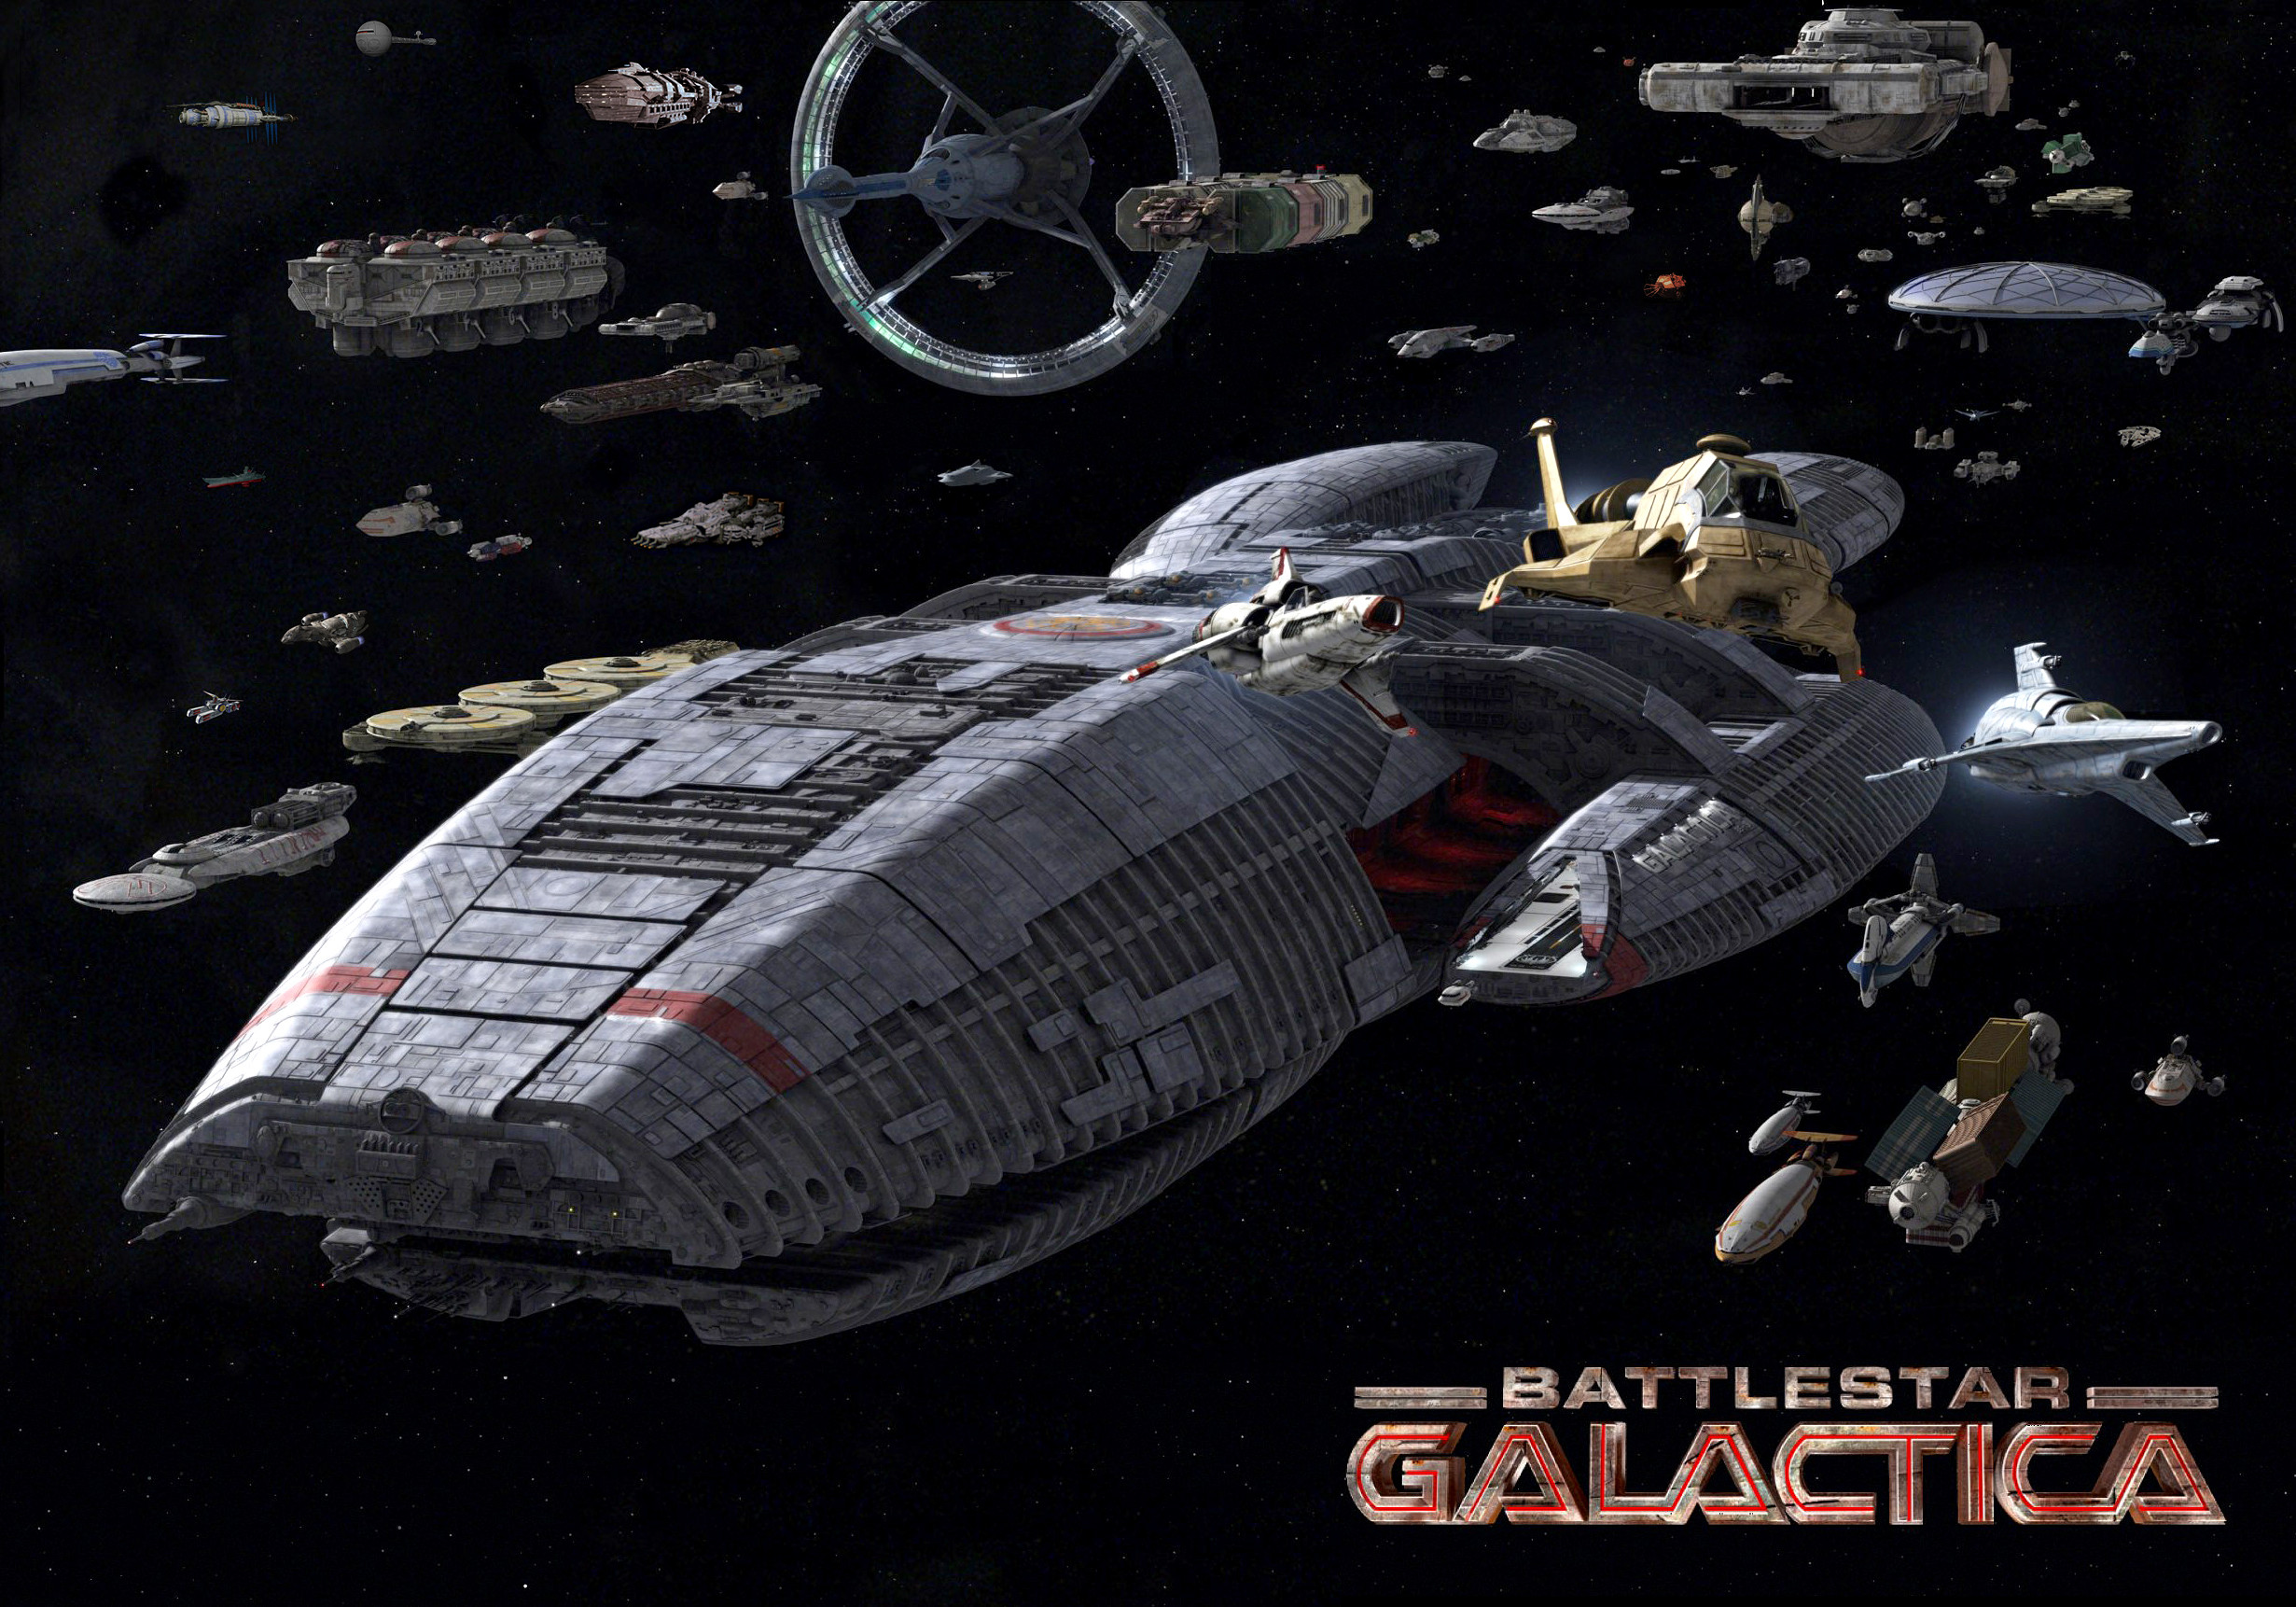 Battlestar Galactica Wallpaper And Screensavers Image